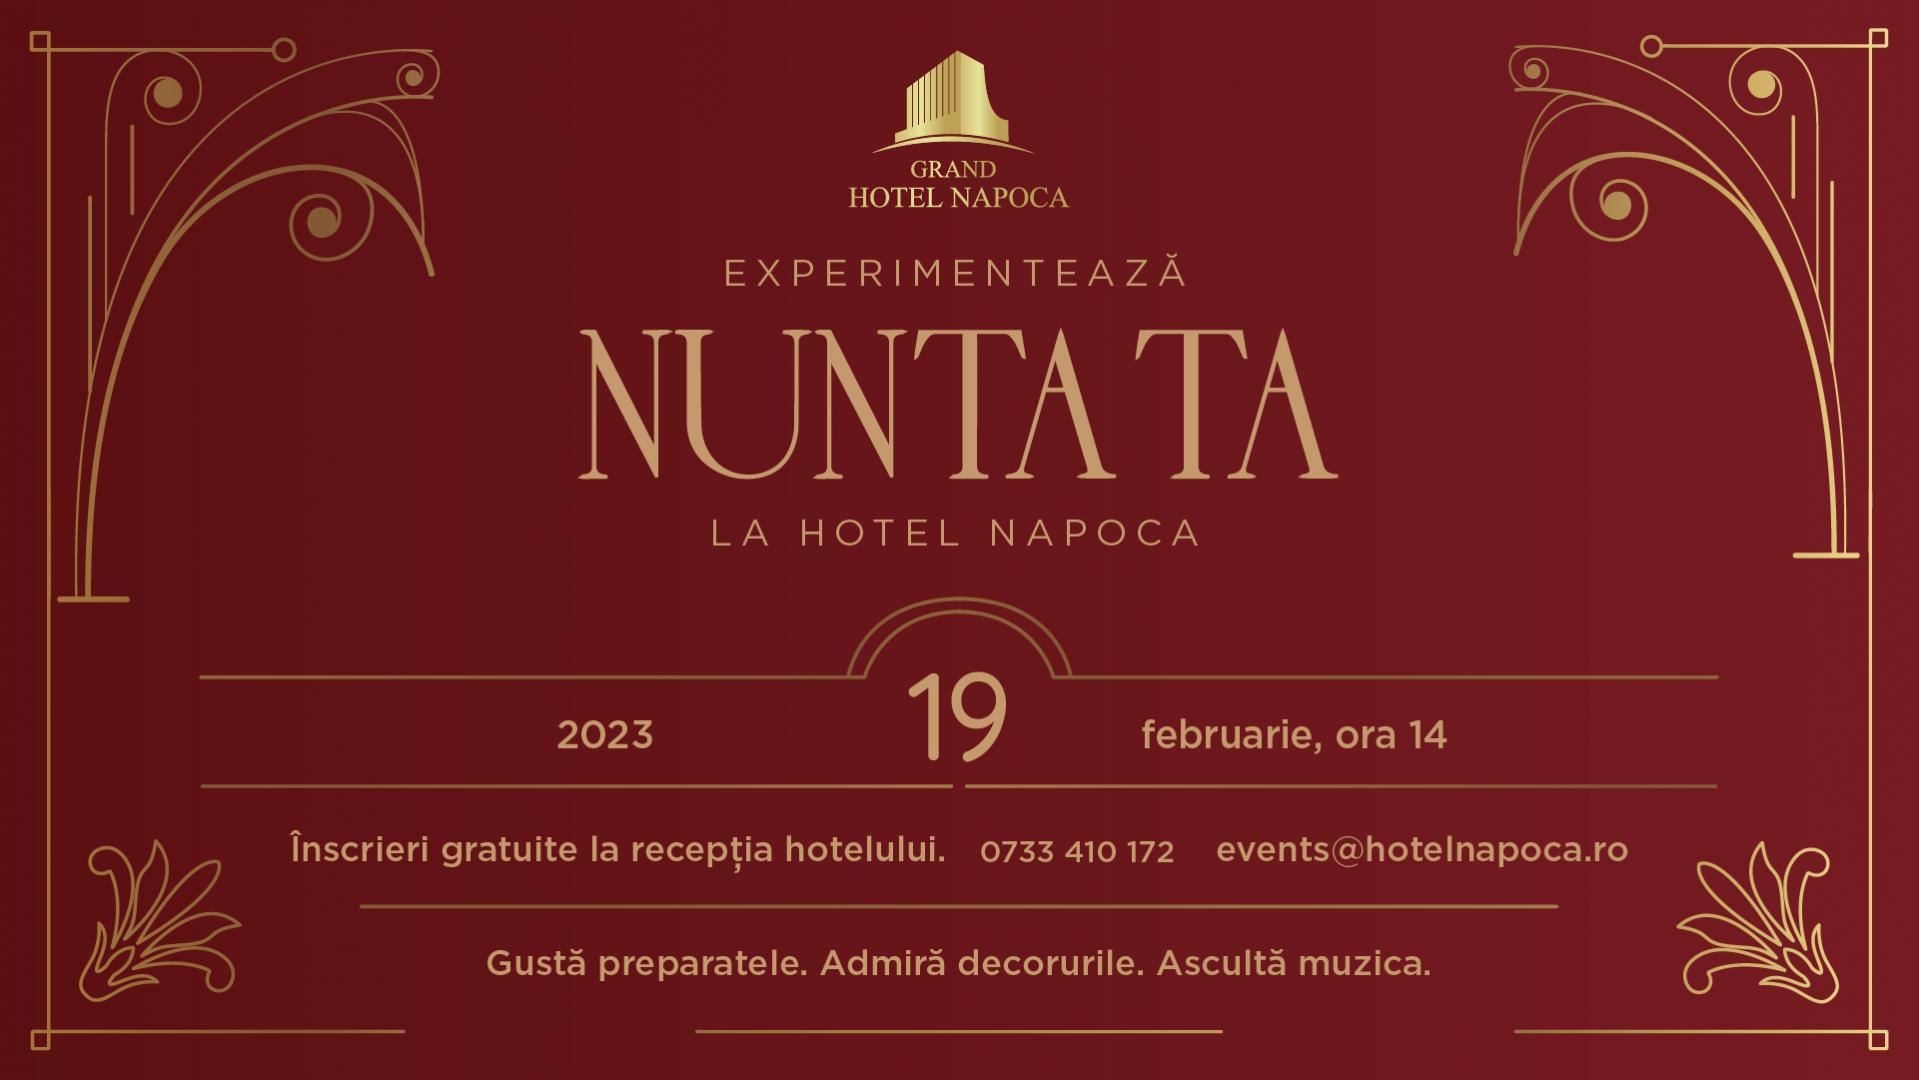 Nunta ta la Hotel Napoca – Eveniment plin de gust și eleganță.